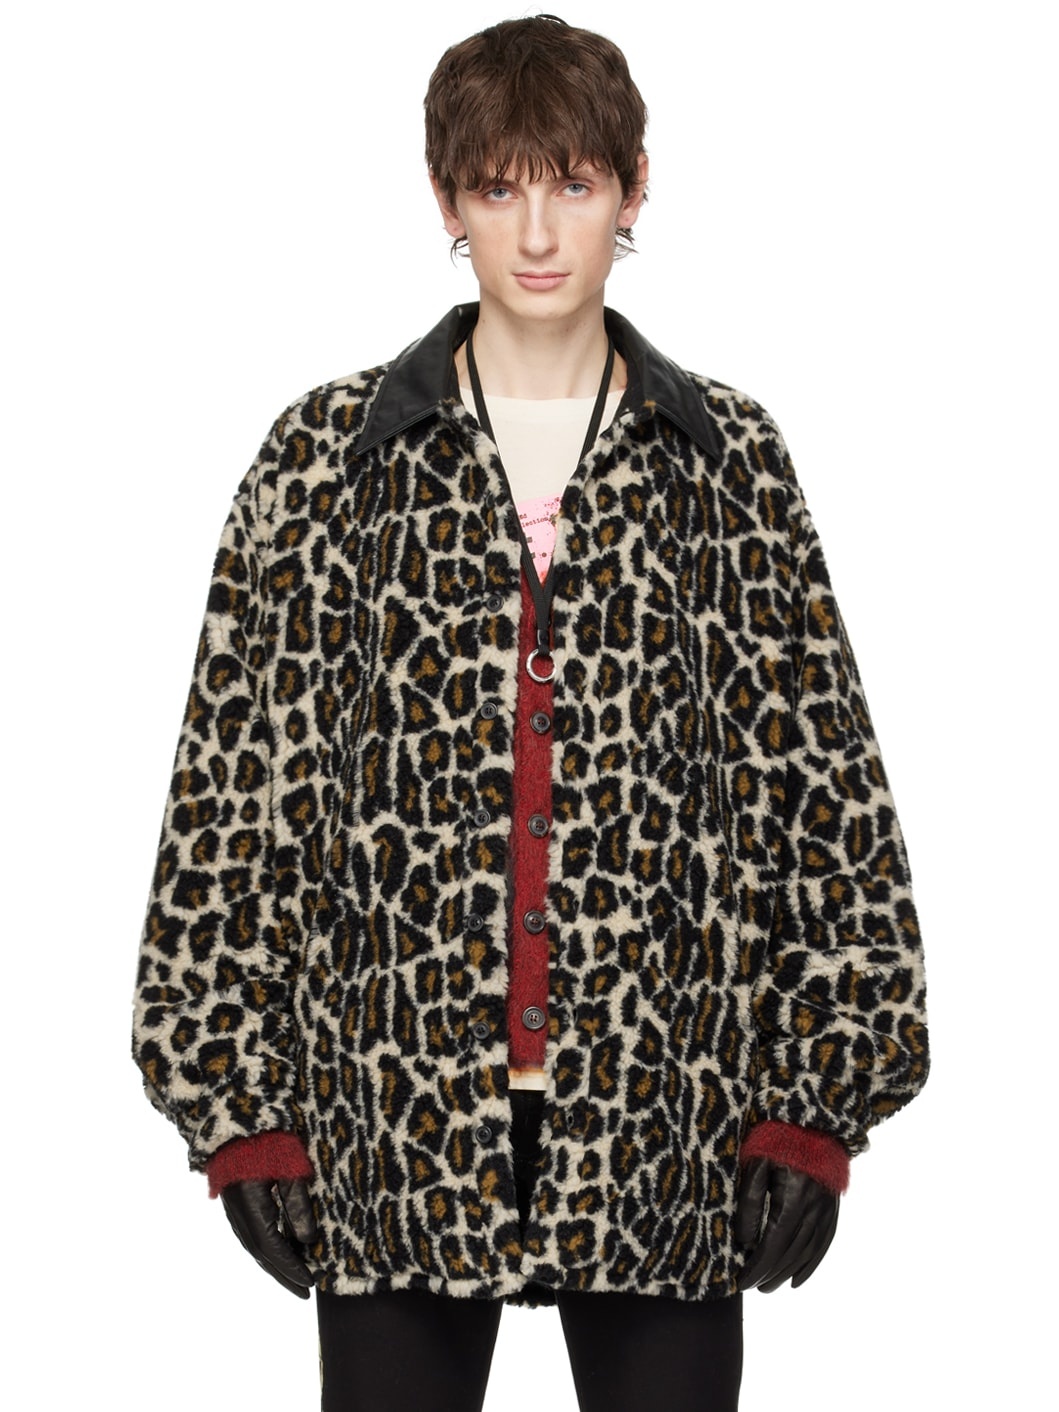 Black & Beige Leopard Print Jacket - 1